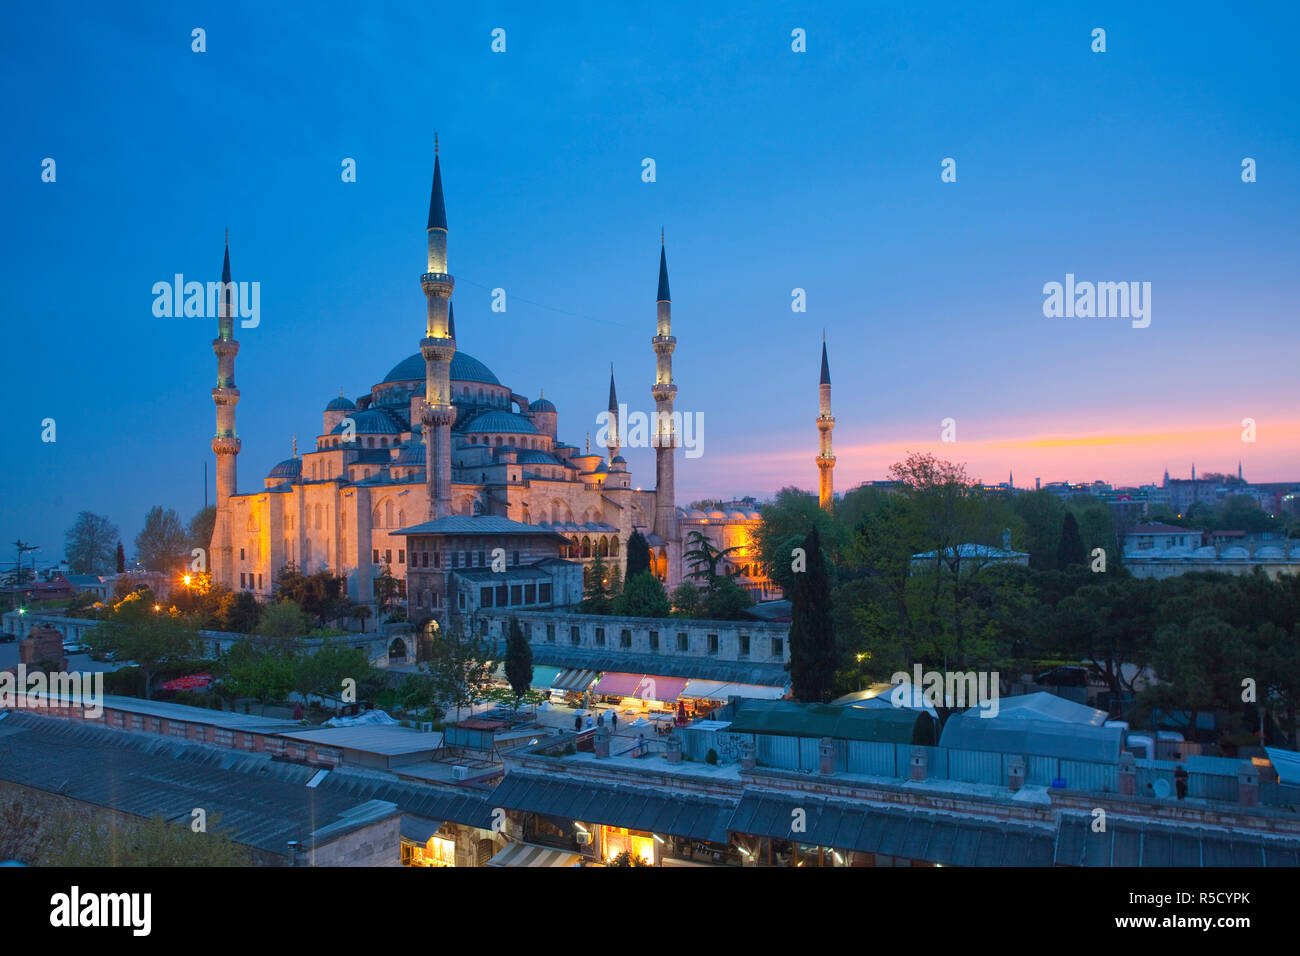 Blue Mosque (Sultan Ahmet Camii), Sultanahmet, Istanbul, Turkey Stock Photo